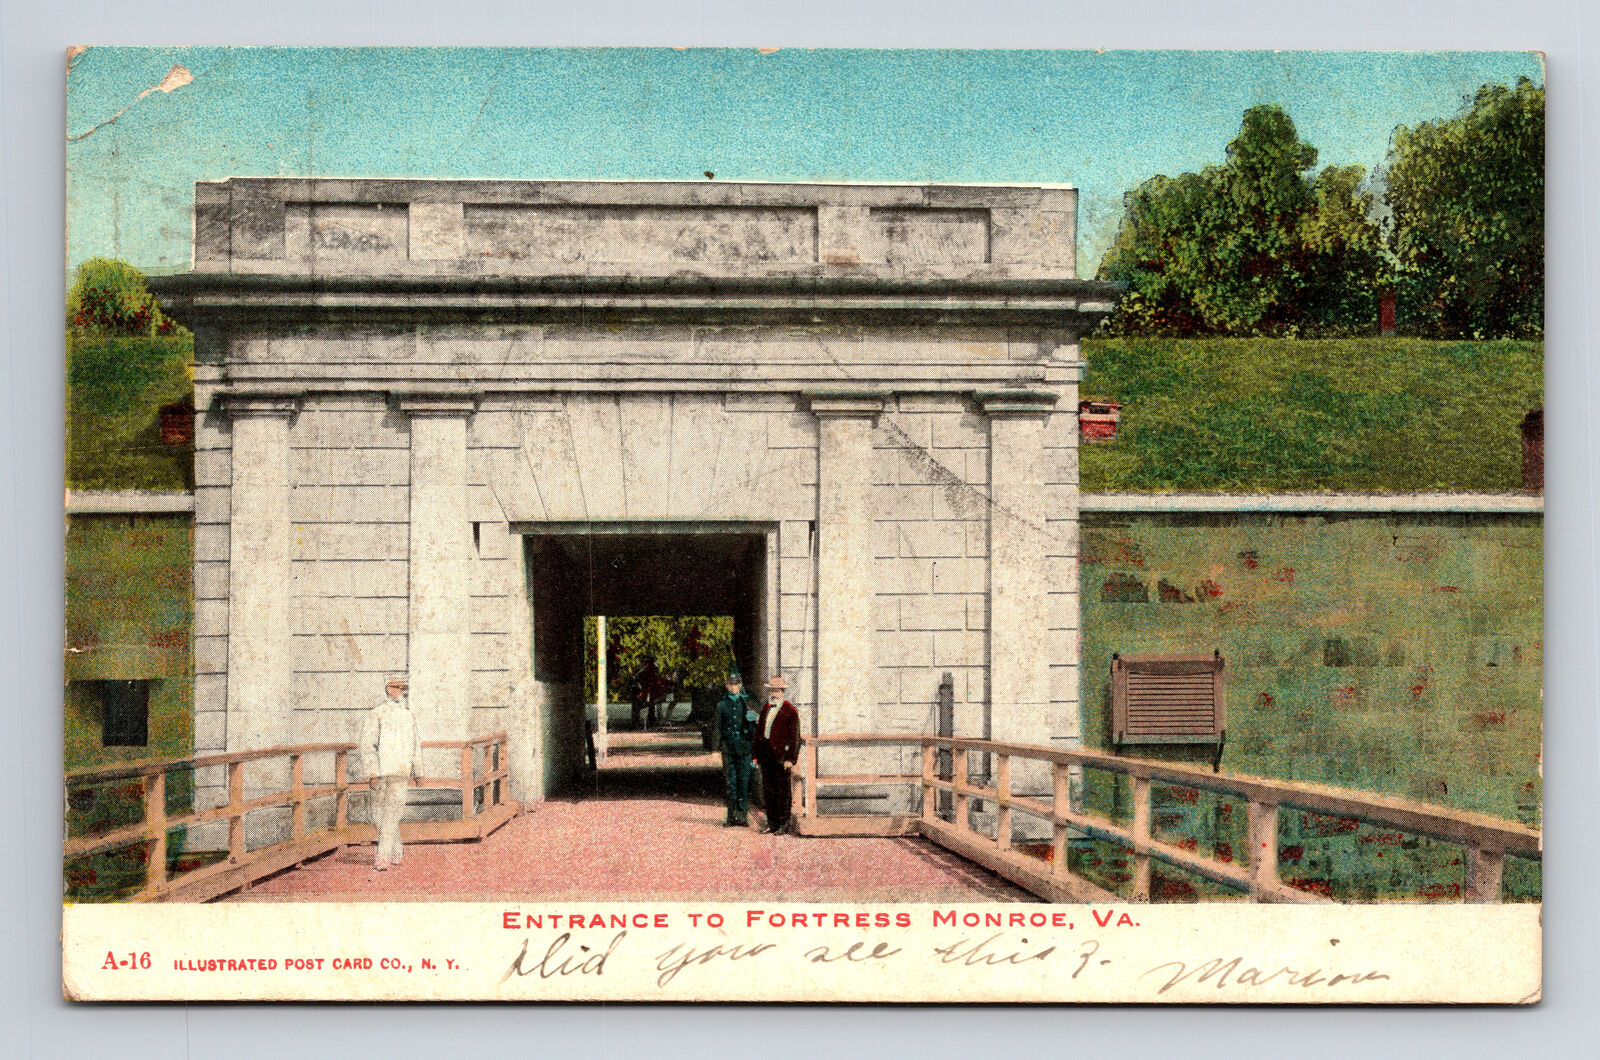 1908 Entrance to Fortress Monroe VA Illustrated Post Card Co IPCC IPCN Postcard